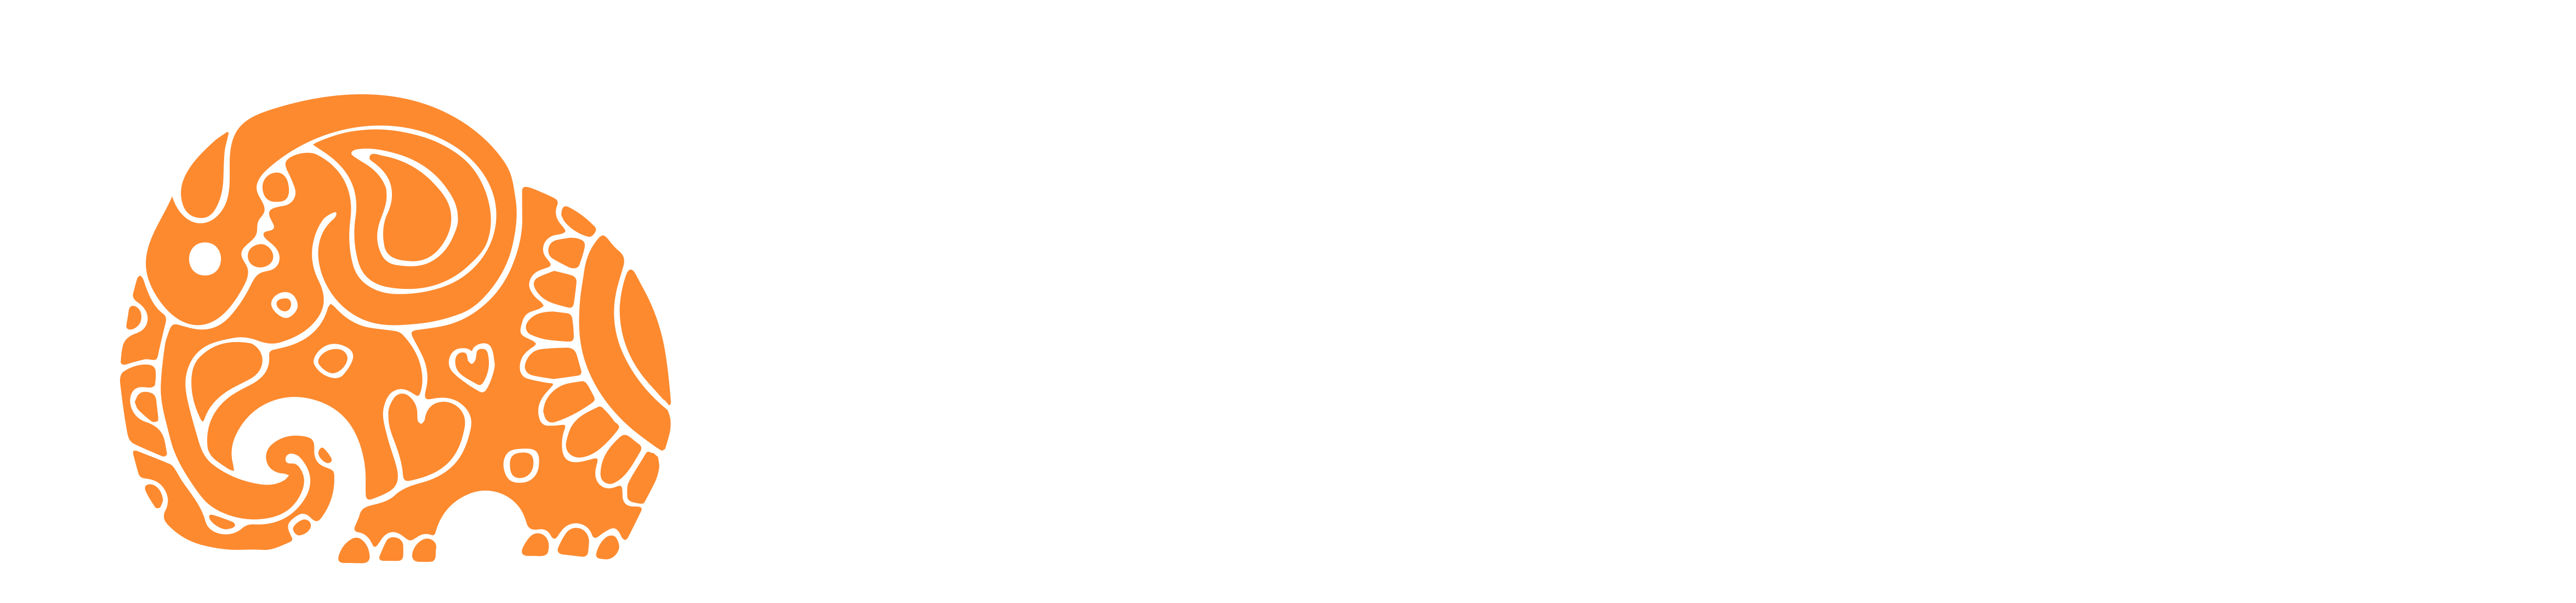 Bhowmik Dave Photography